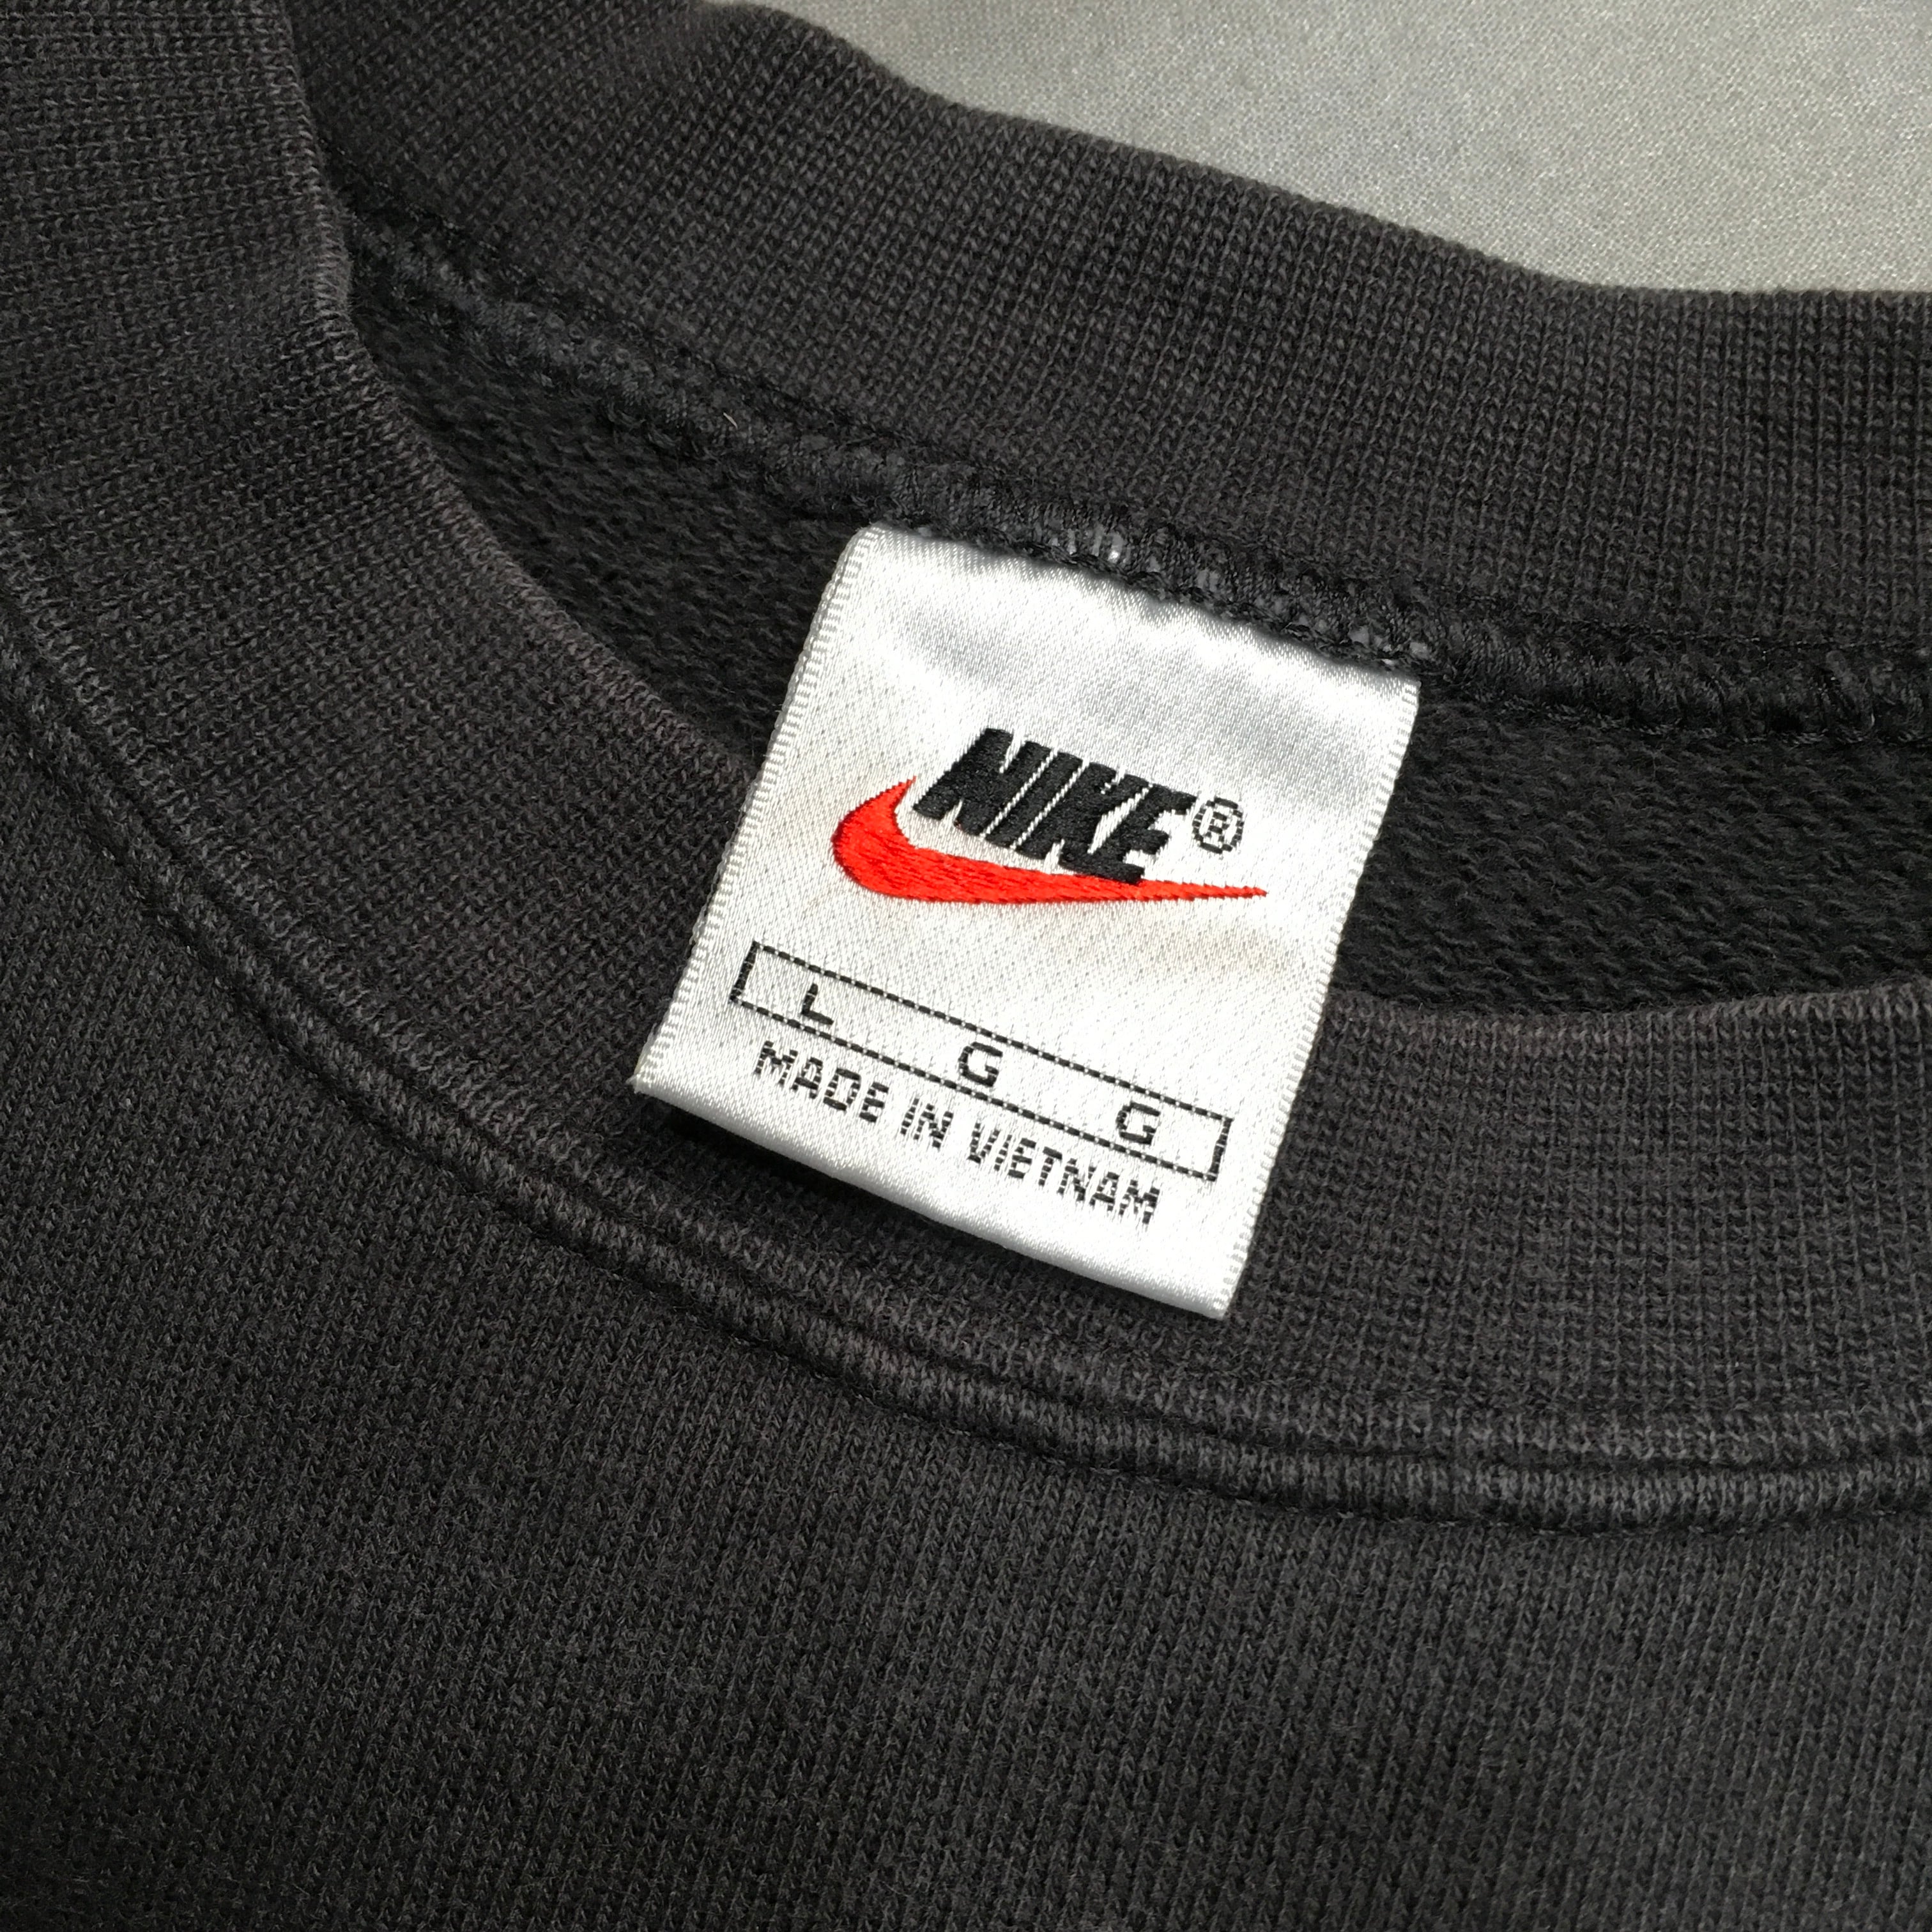 NIKE 90s oversize logo sweat 〈レトロ古着 ナイキ オーバーサイズ